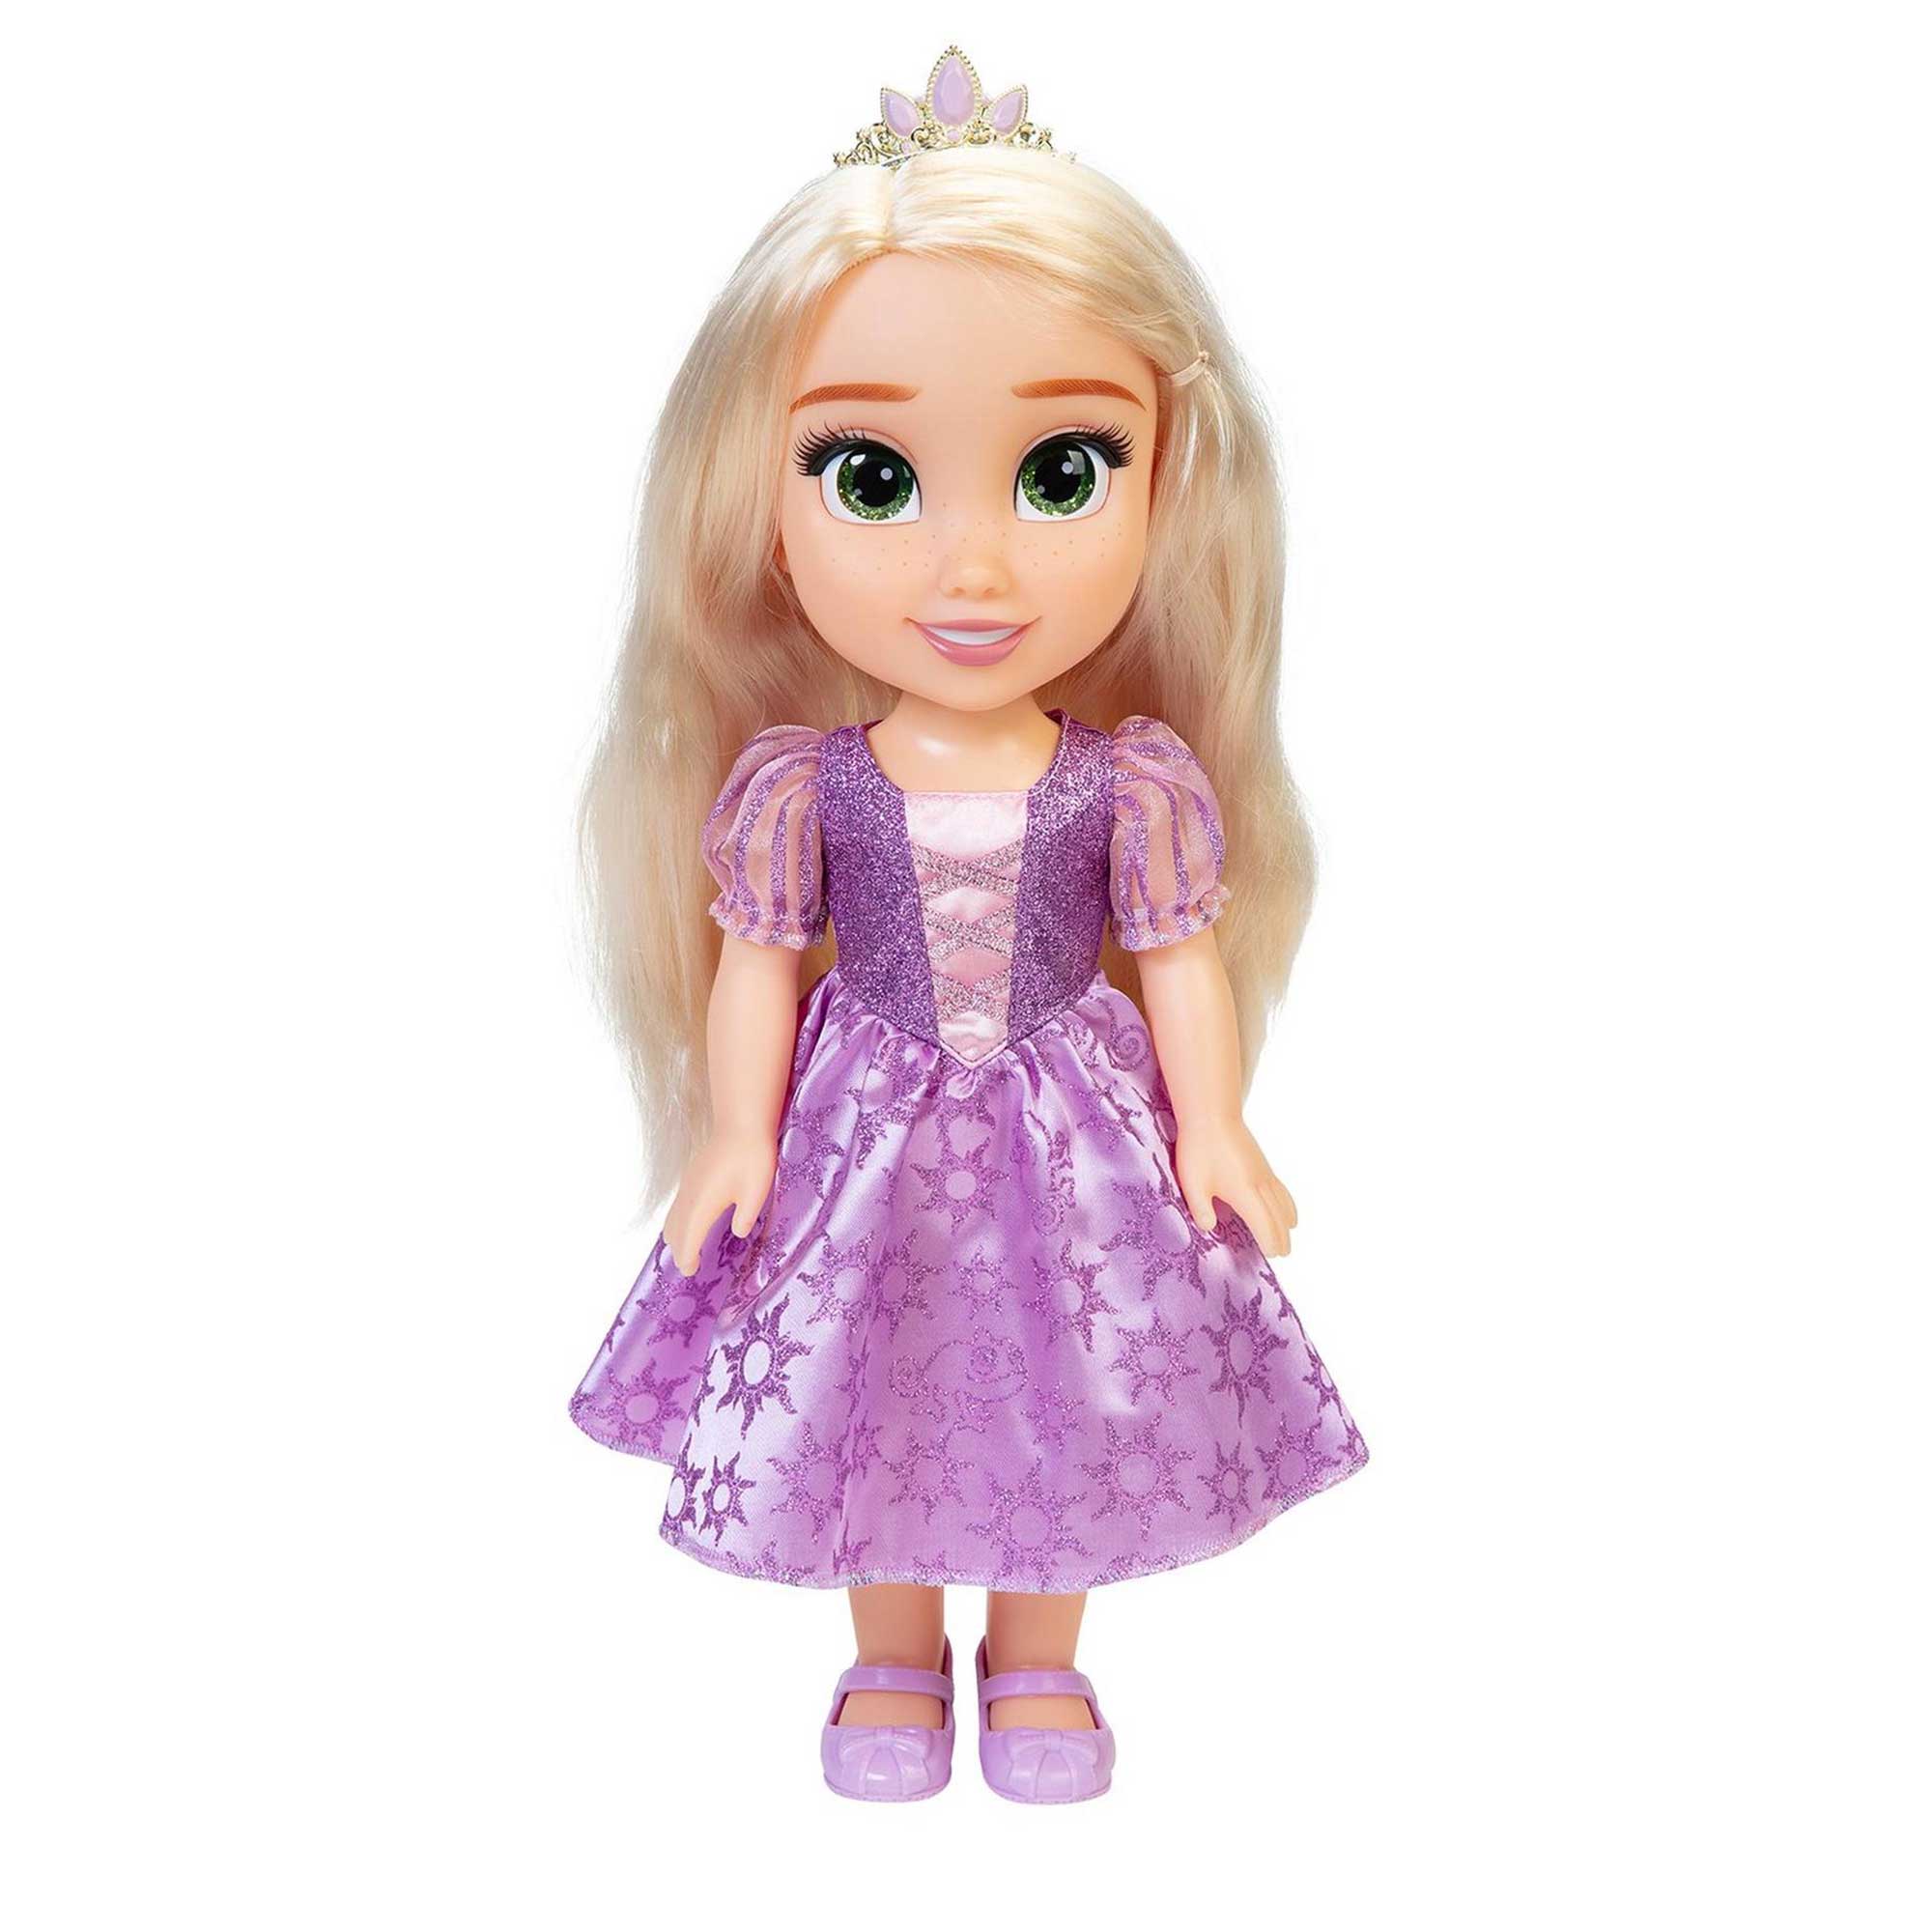 Image of Disney Princess My Friend Rapunzel Doll